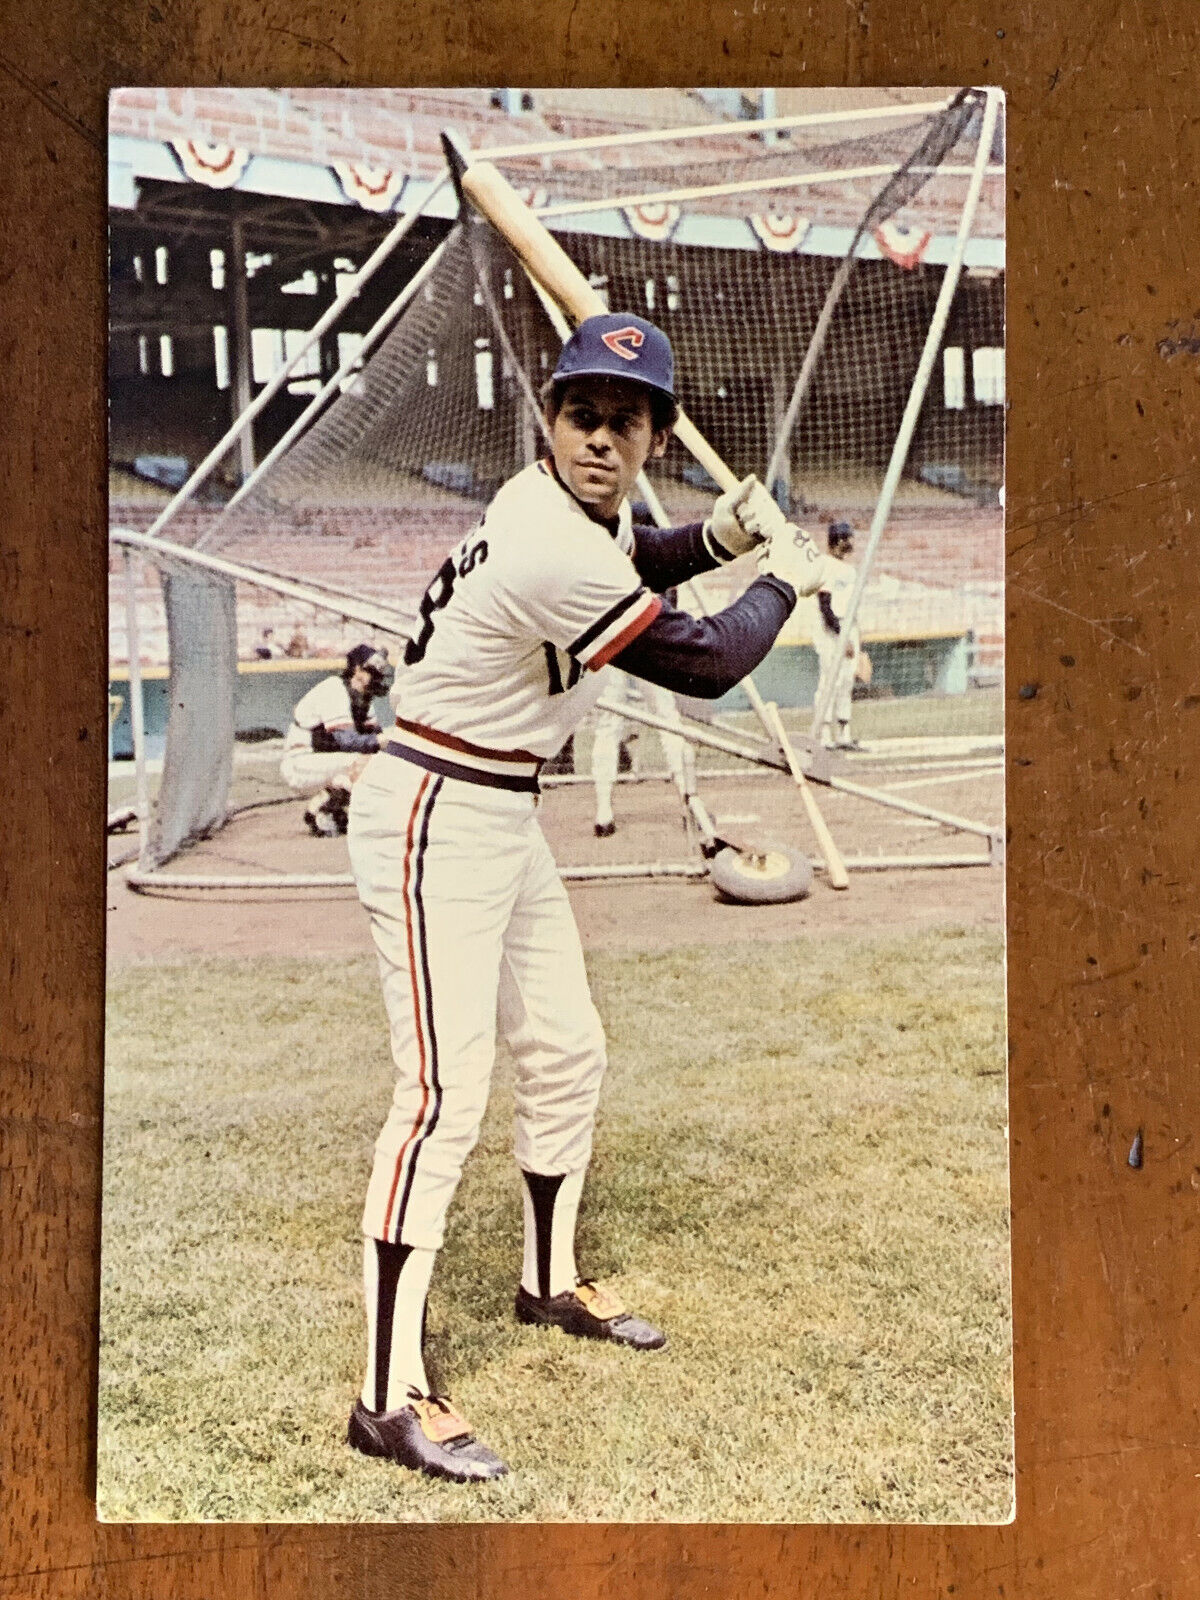 Baseball, Rosendo (Rusty) Torres, Cleveland Indians, ca 1970